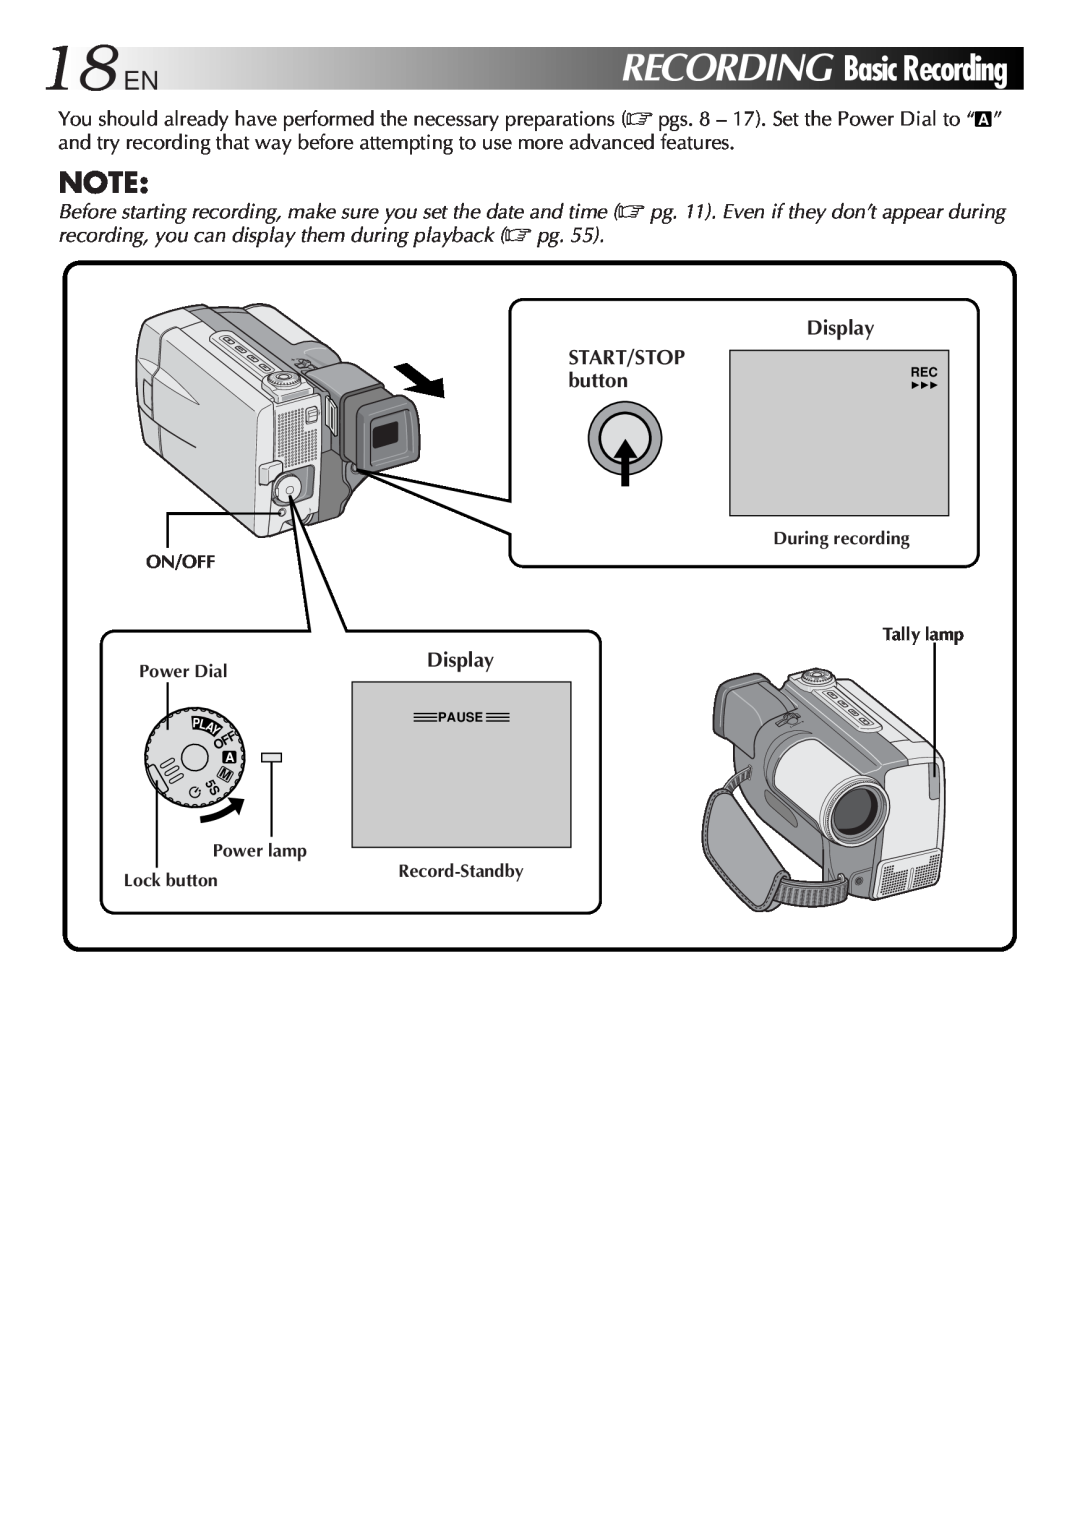 JVC GR-DVL9000 manual 18ENRECORDING, BasicRecording, Display, START/STOP button, Play, M 5S 